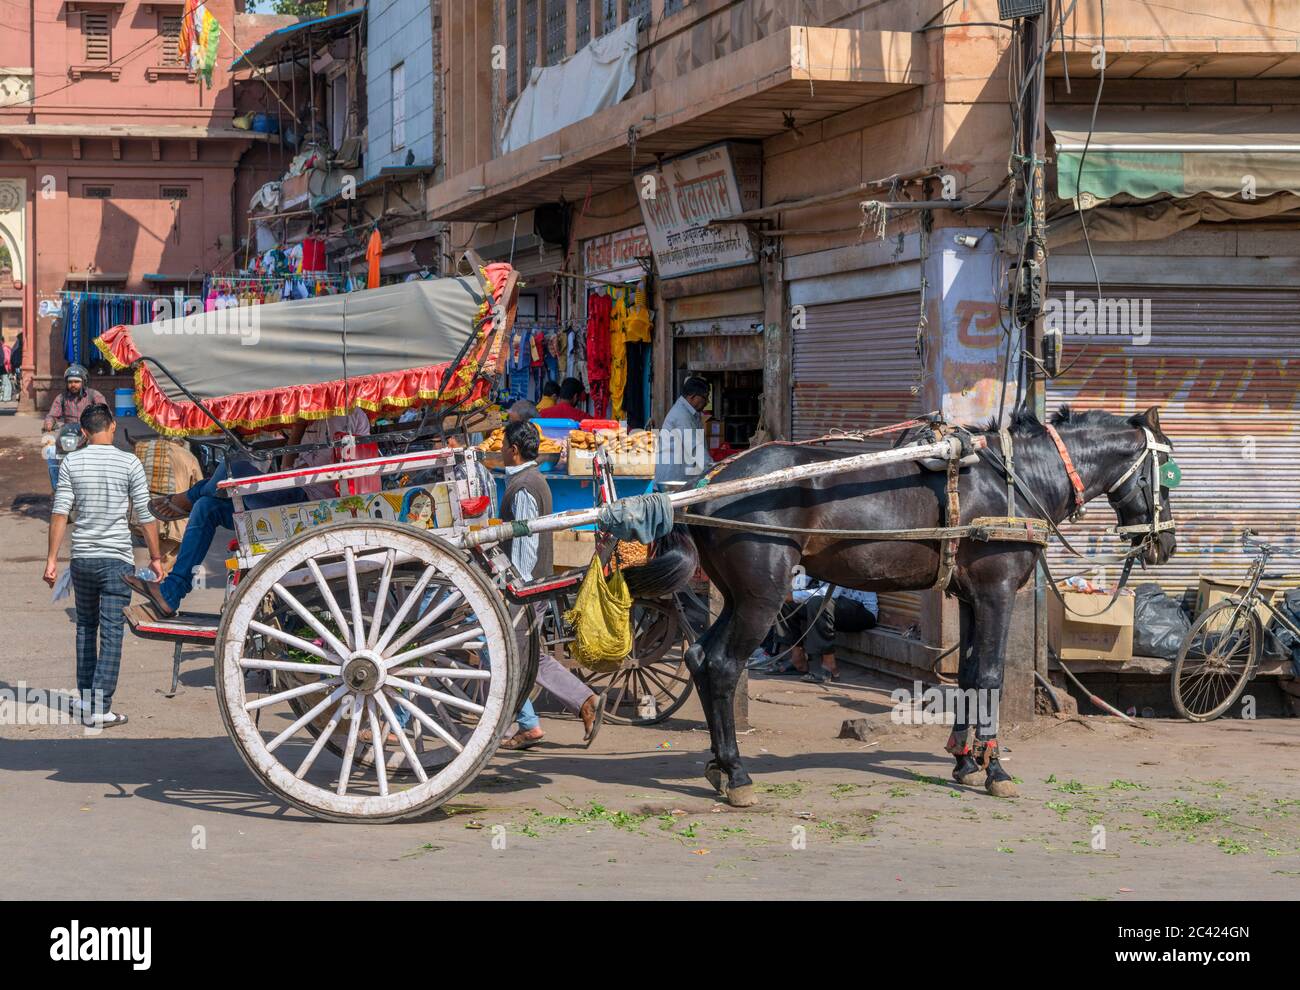 Horse and cart on Nai Sarak, a busy street in the city centre near the Sardar Market, Jodhpur, Rajasthan, India Stock Photo